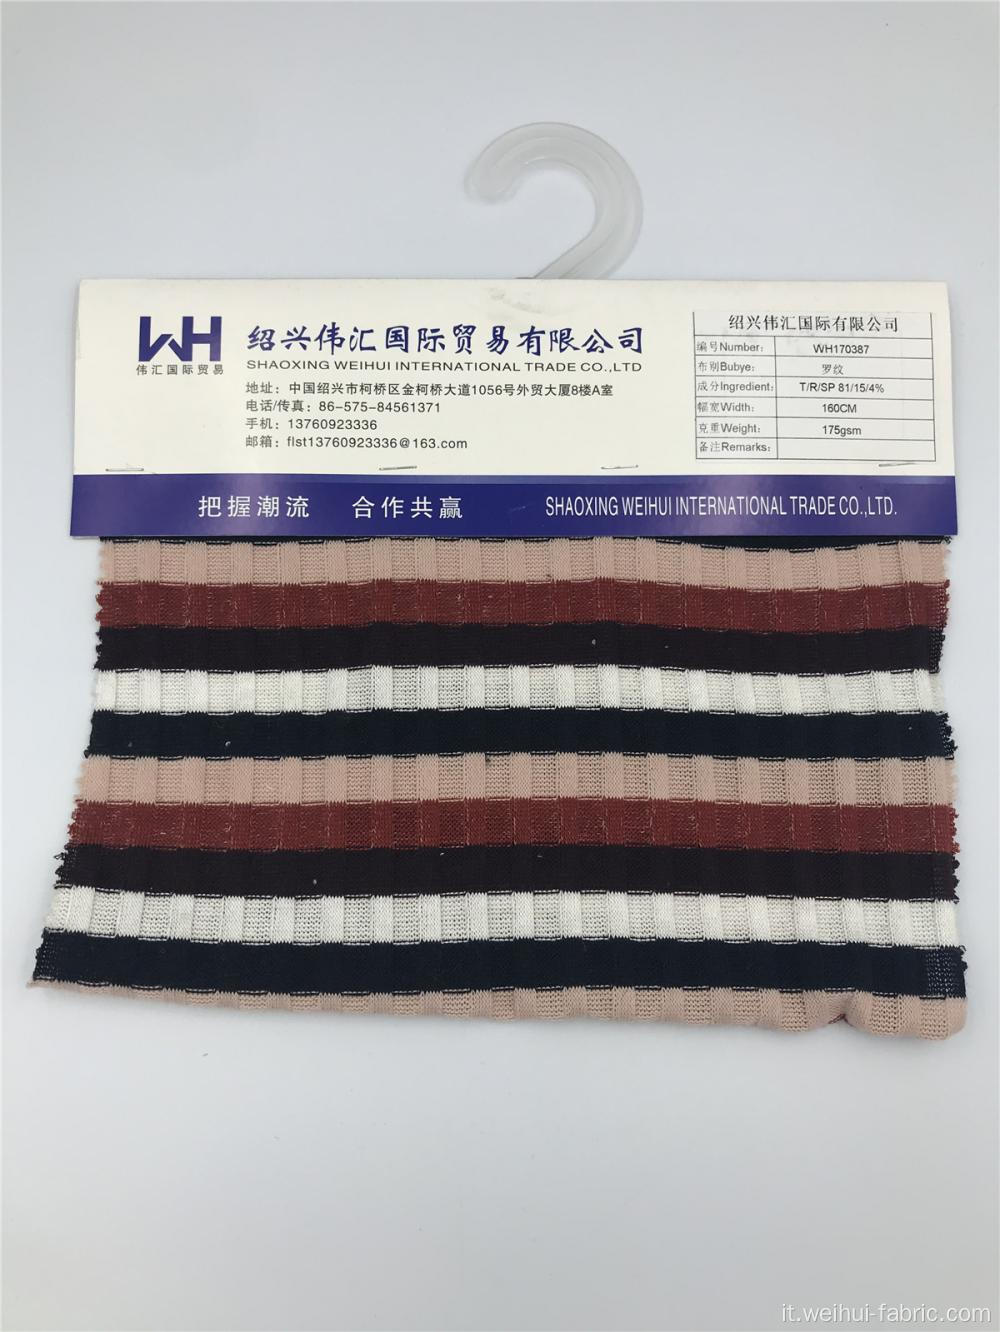 Tessuto a maglia a coste T / R / SP Tessuto a strisce in 3 colori